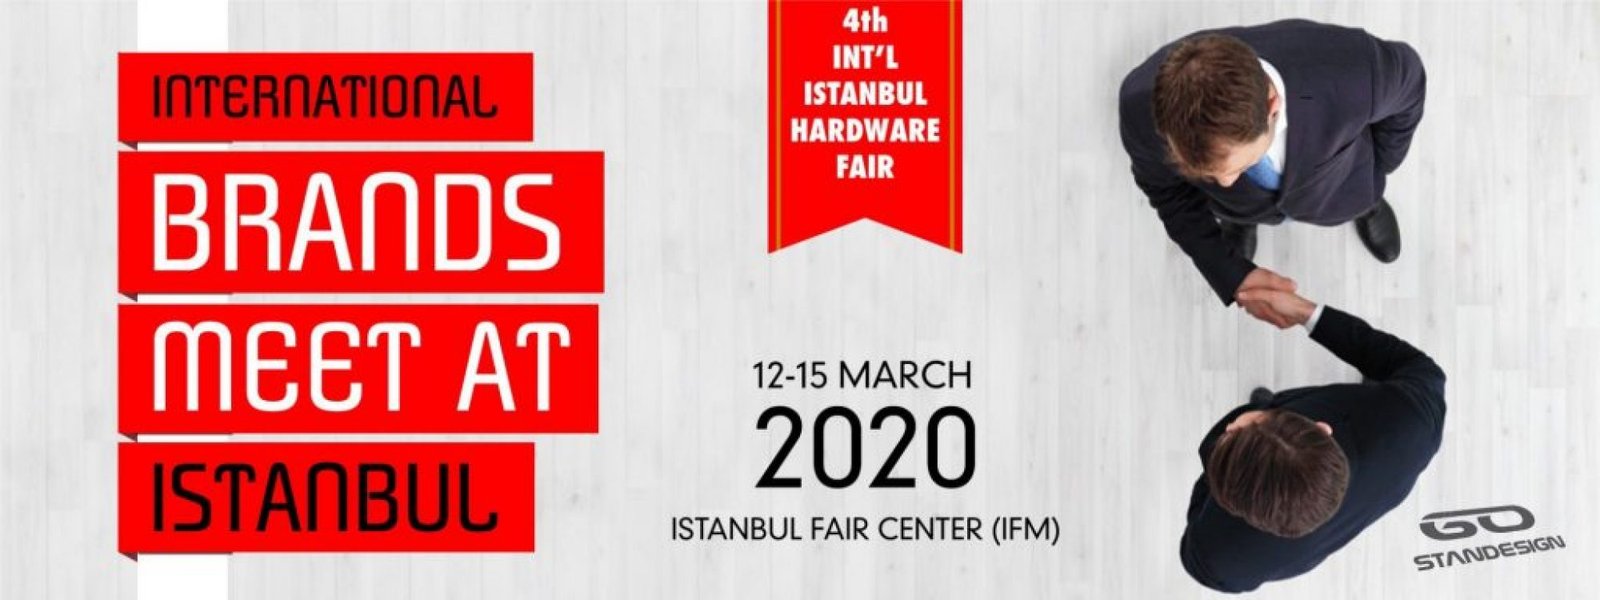 Istanbul Hirdavat Fuari / Hardware Fair 2020